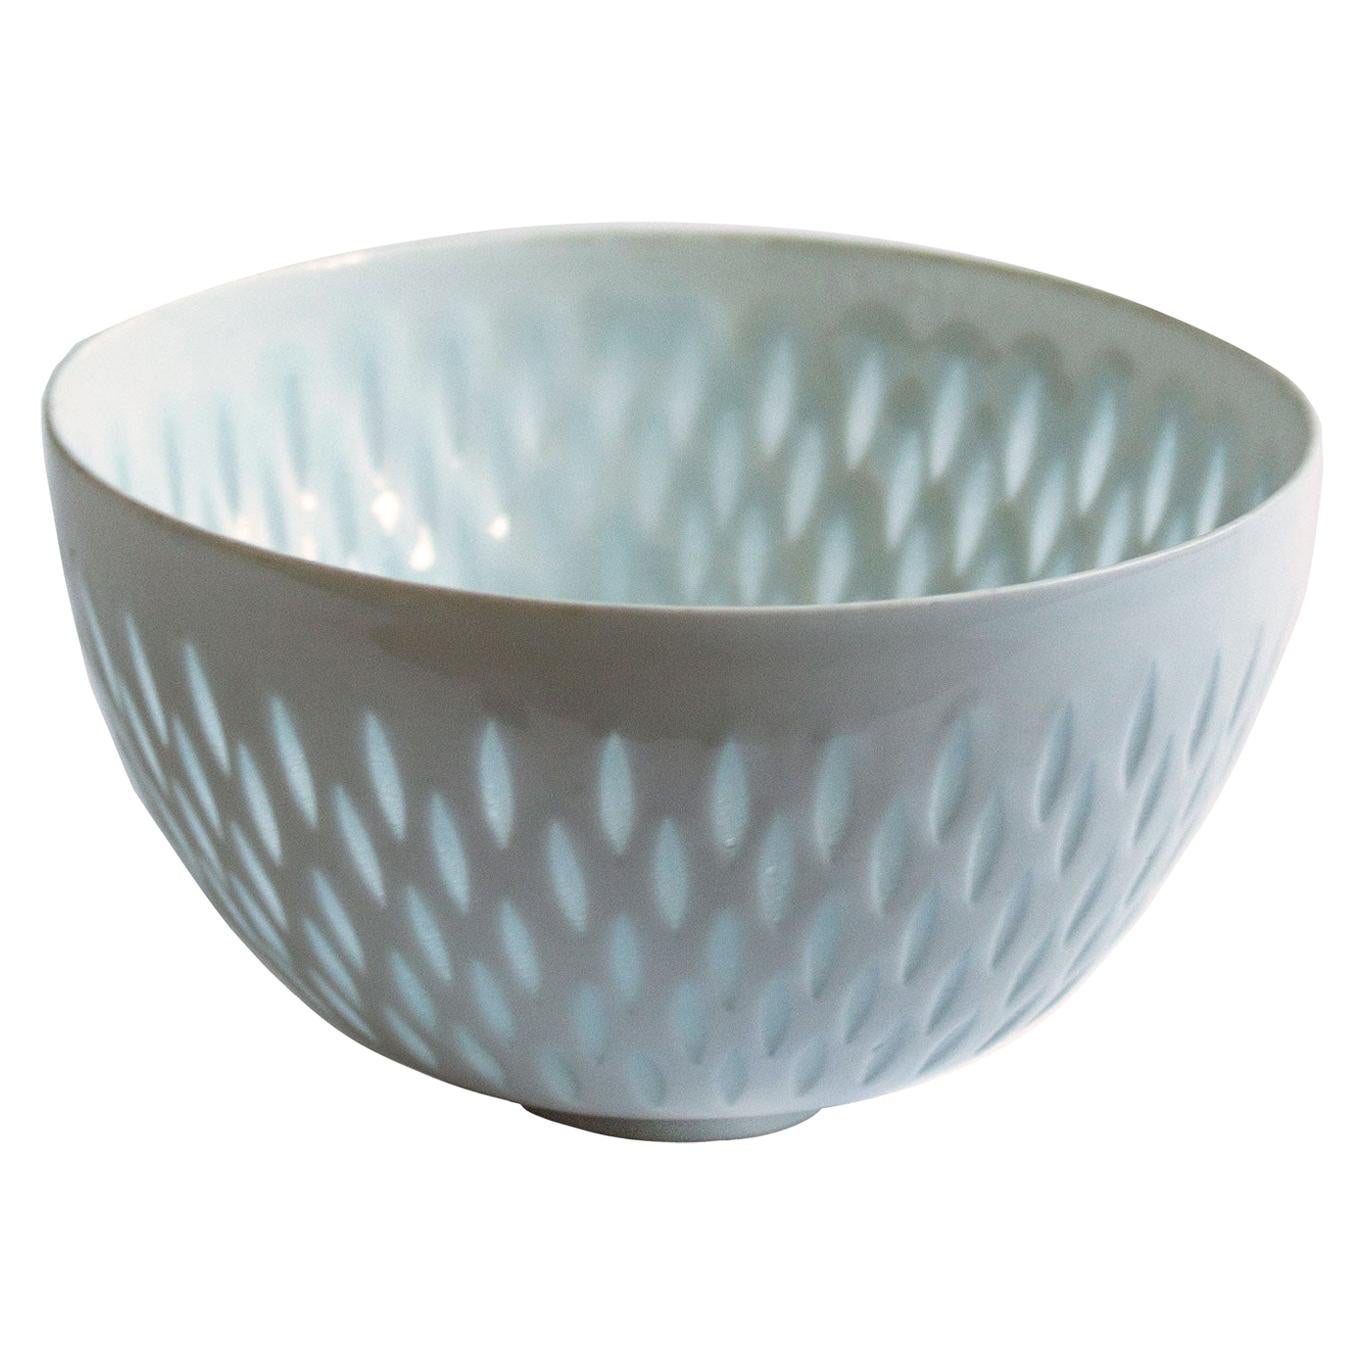 Two Scandinavian Modern rice grain porcelain bowl by Friedl Holzer-Kjellberg for Arabia in Finland.
A delicate 